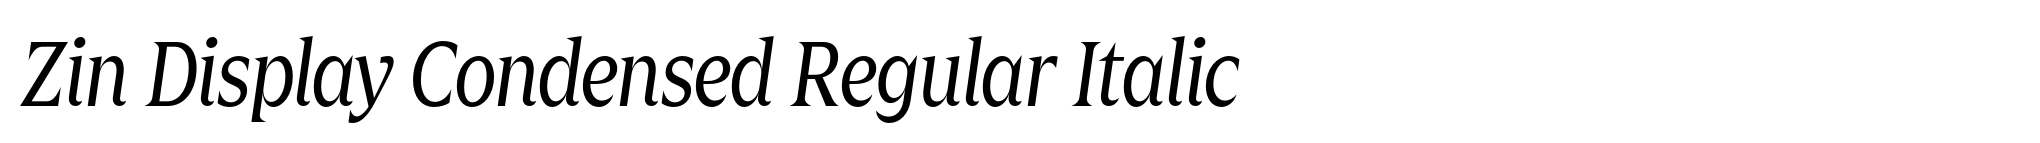 Zin Display Condensed Regular Italic image